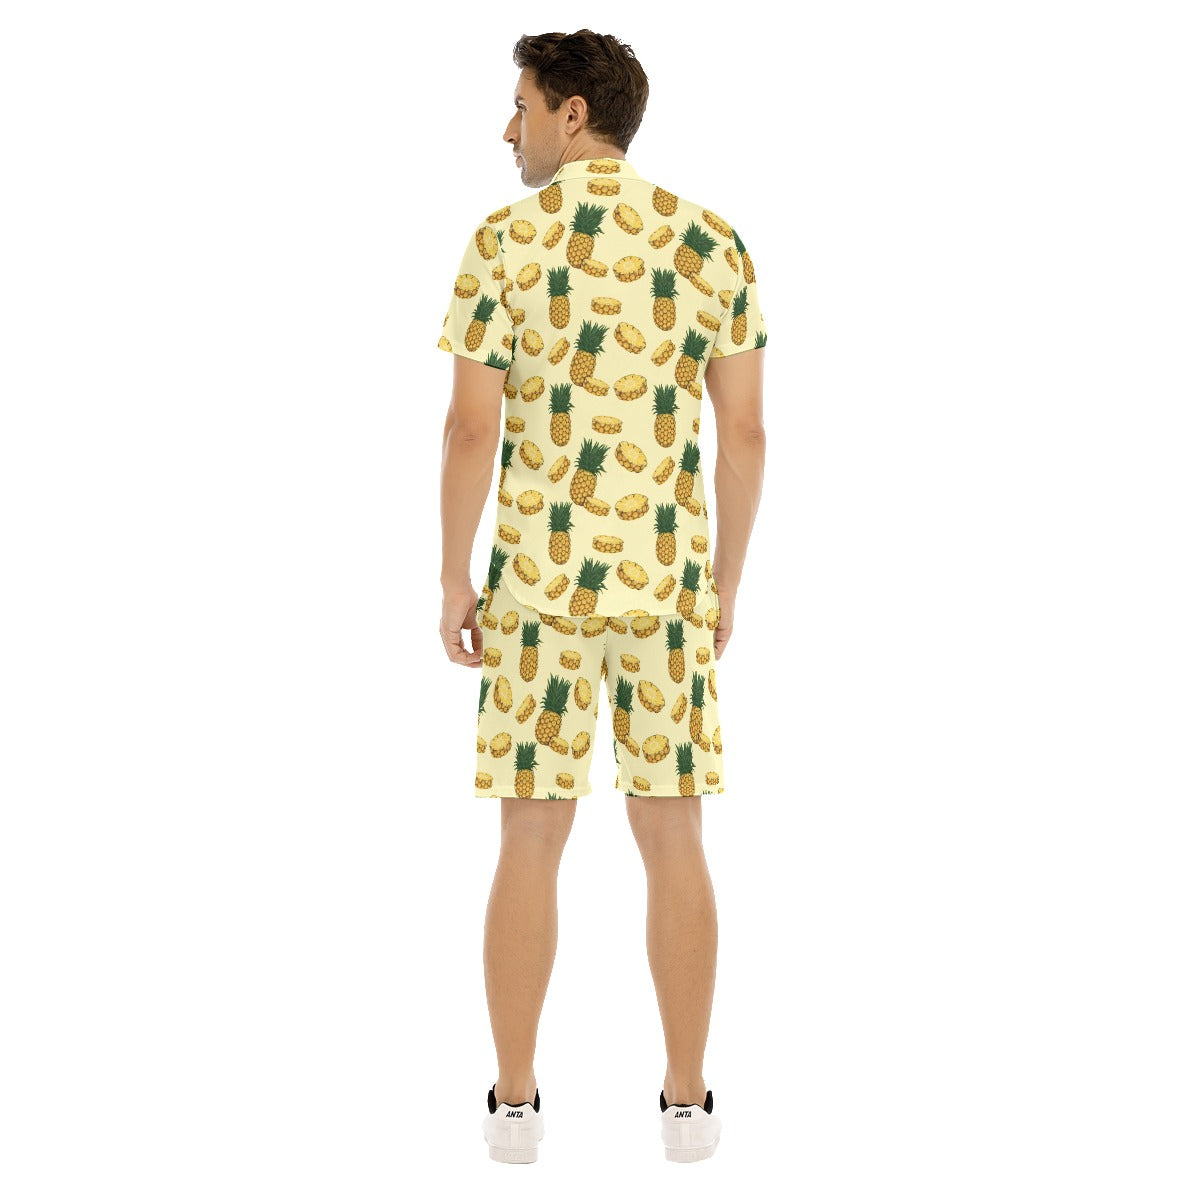 Pineapple Passion Men's Shirt and Shorts Set